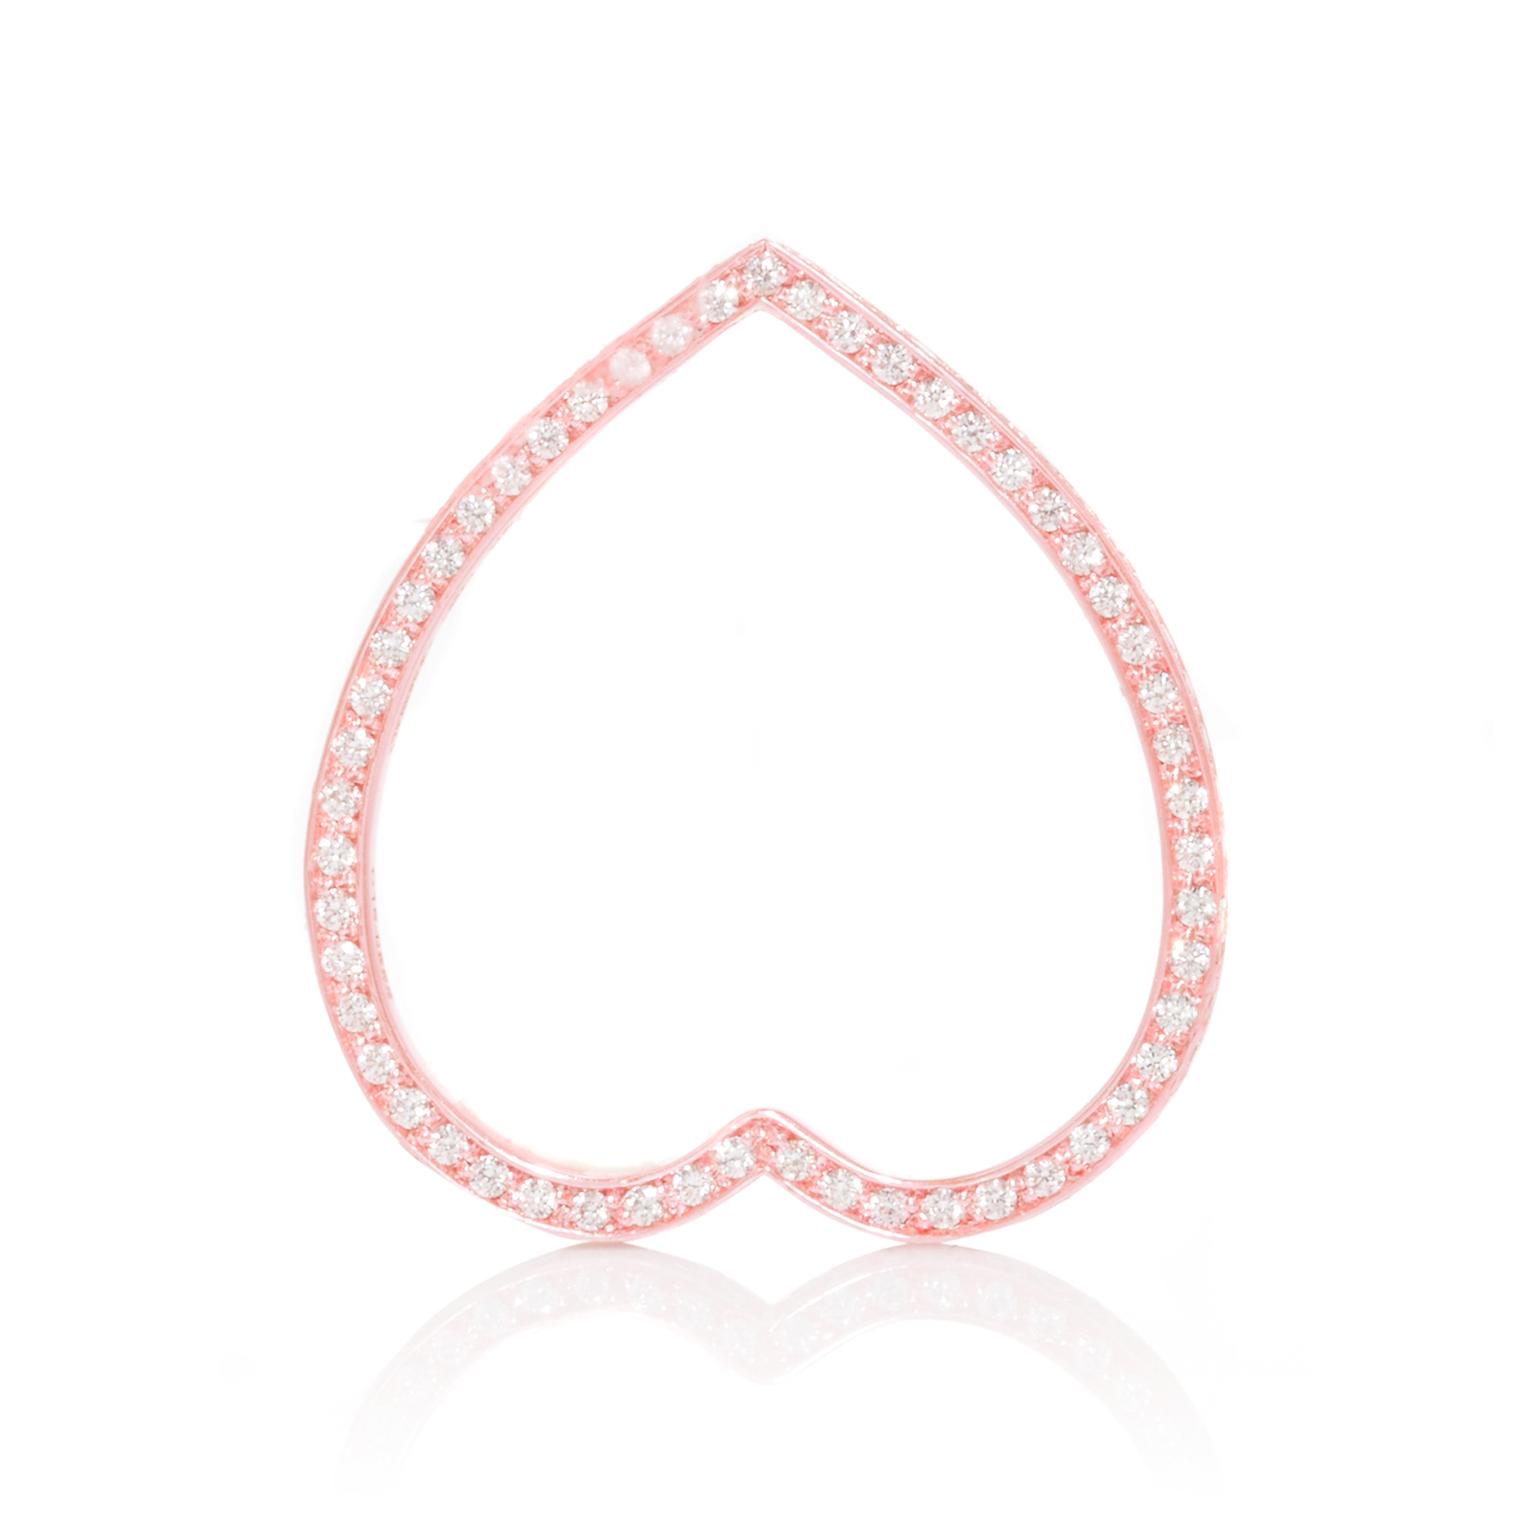 Repossi pink and white diamond ring